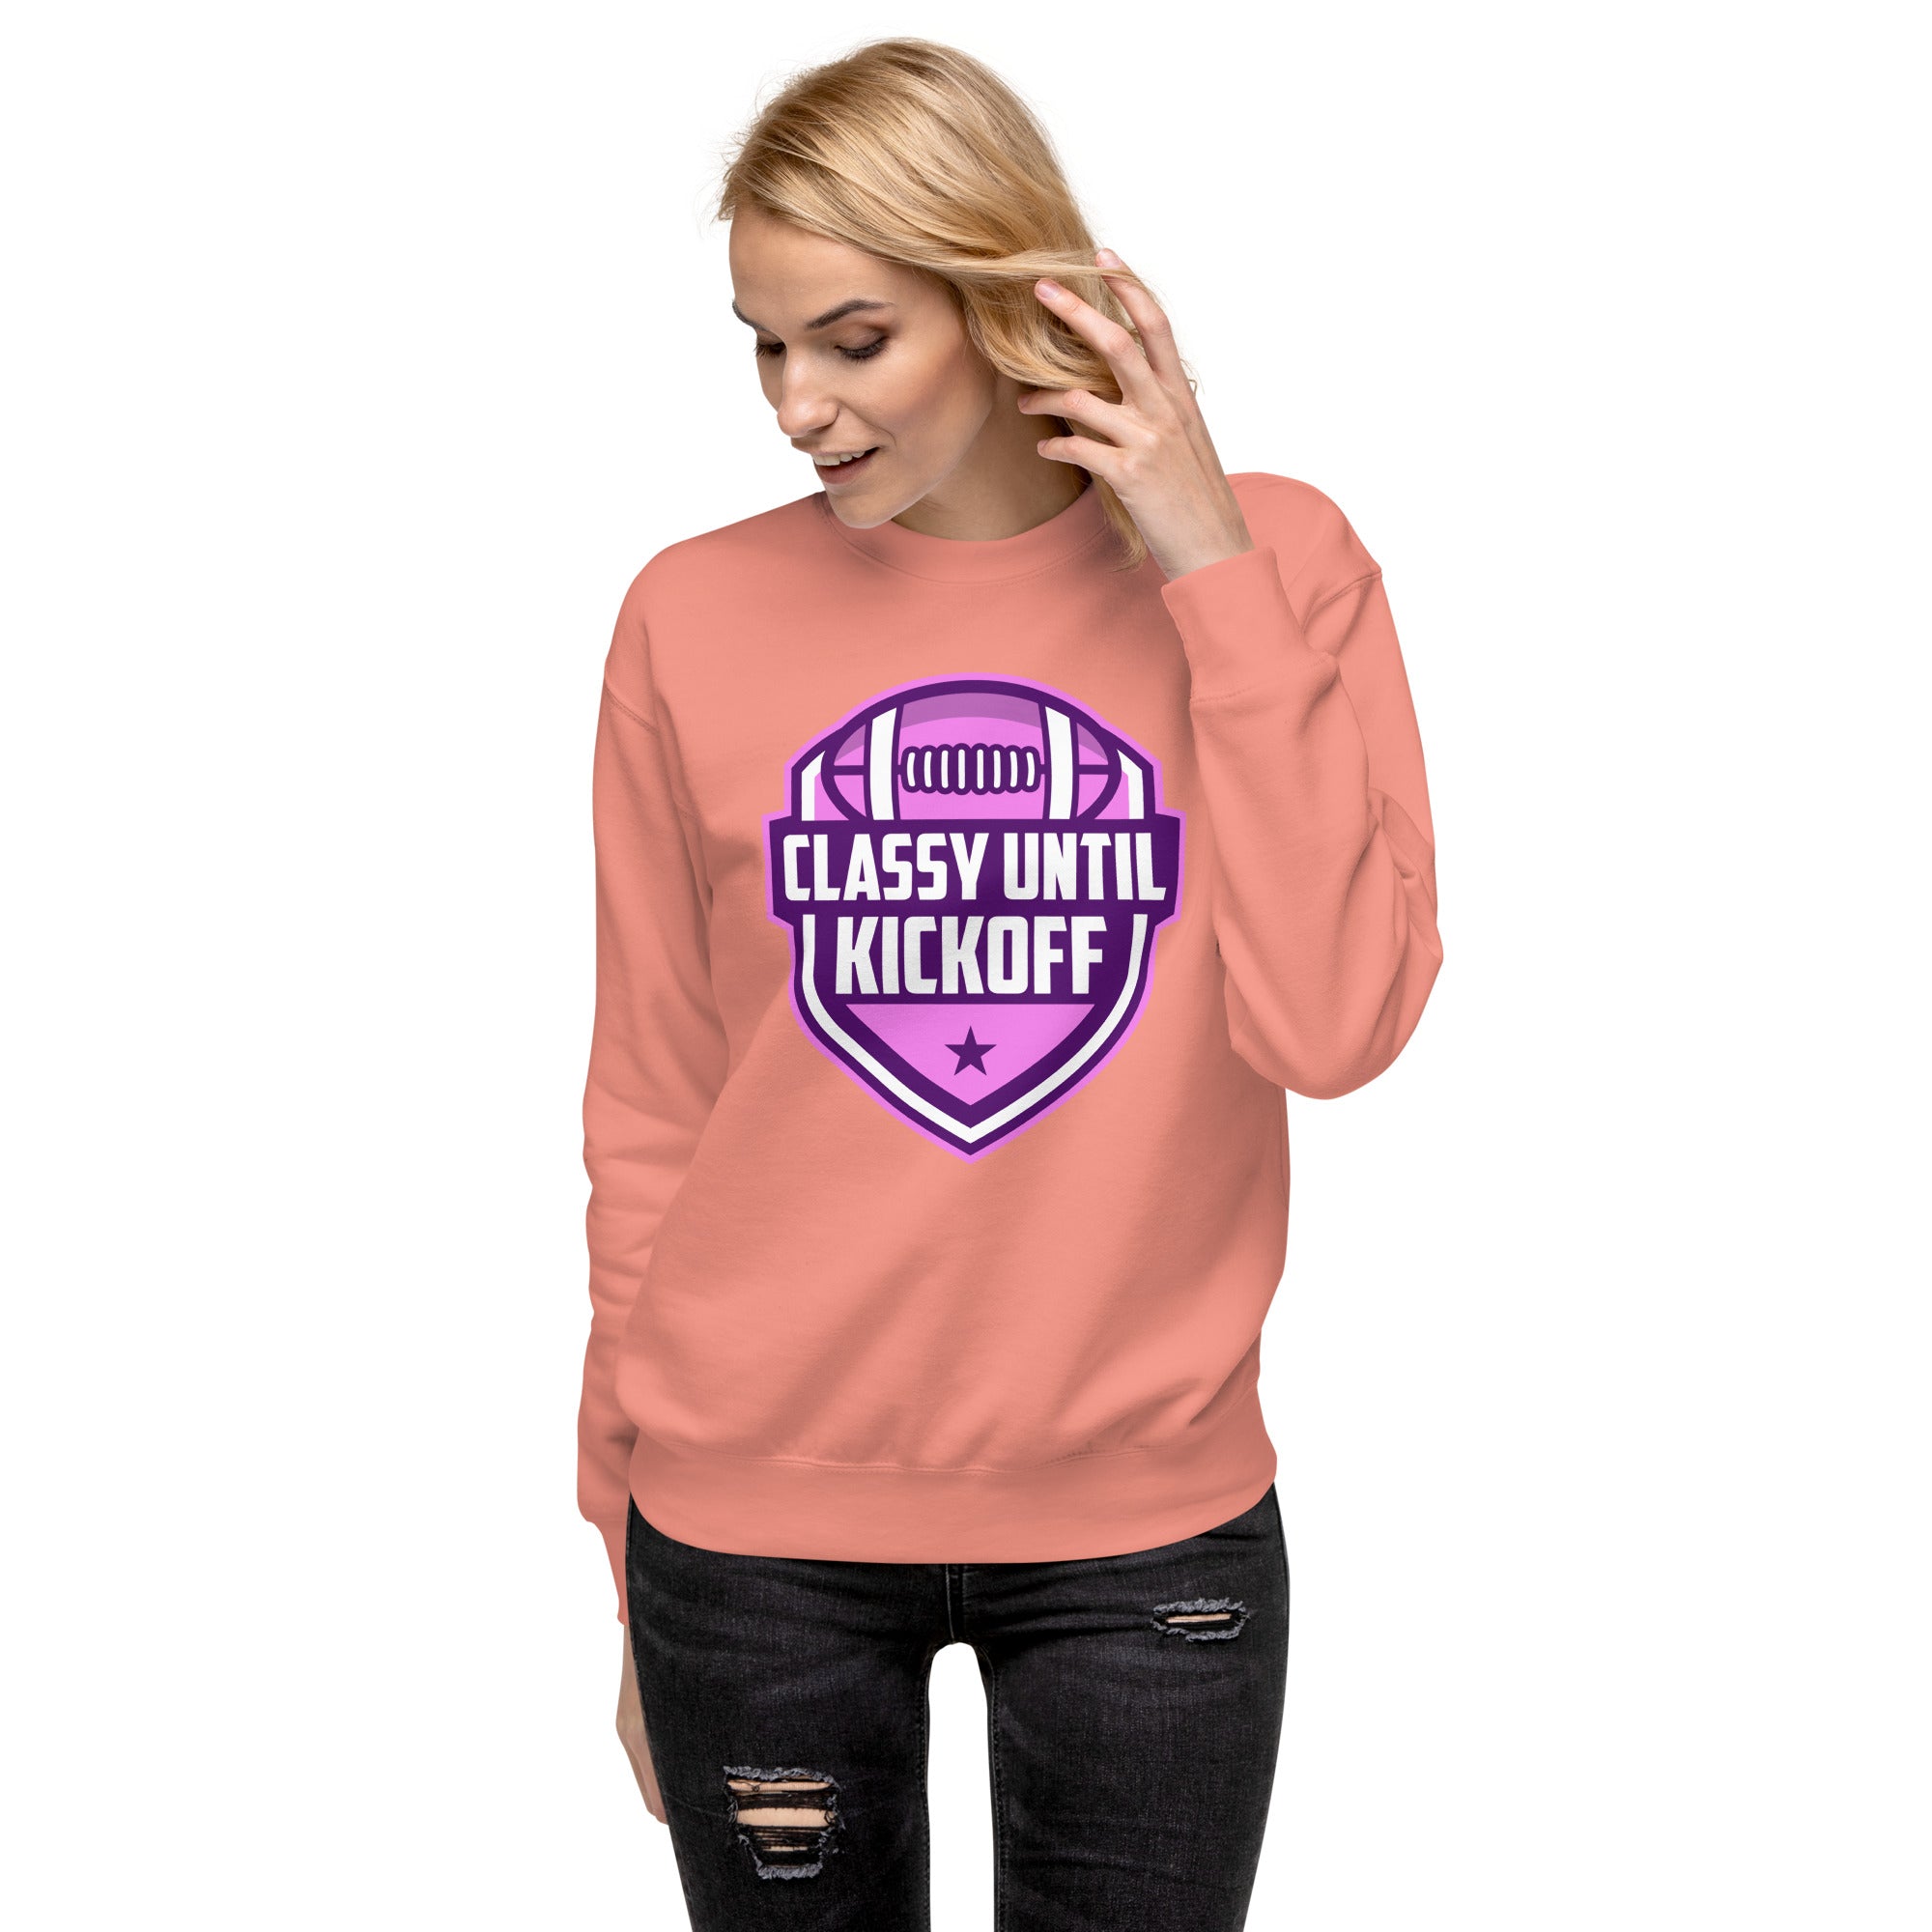 Classy Until KickOff Premium Women's Sweatshirt